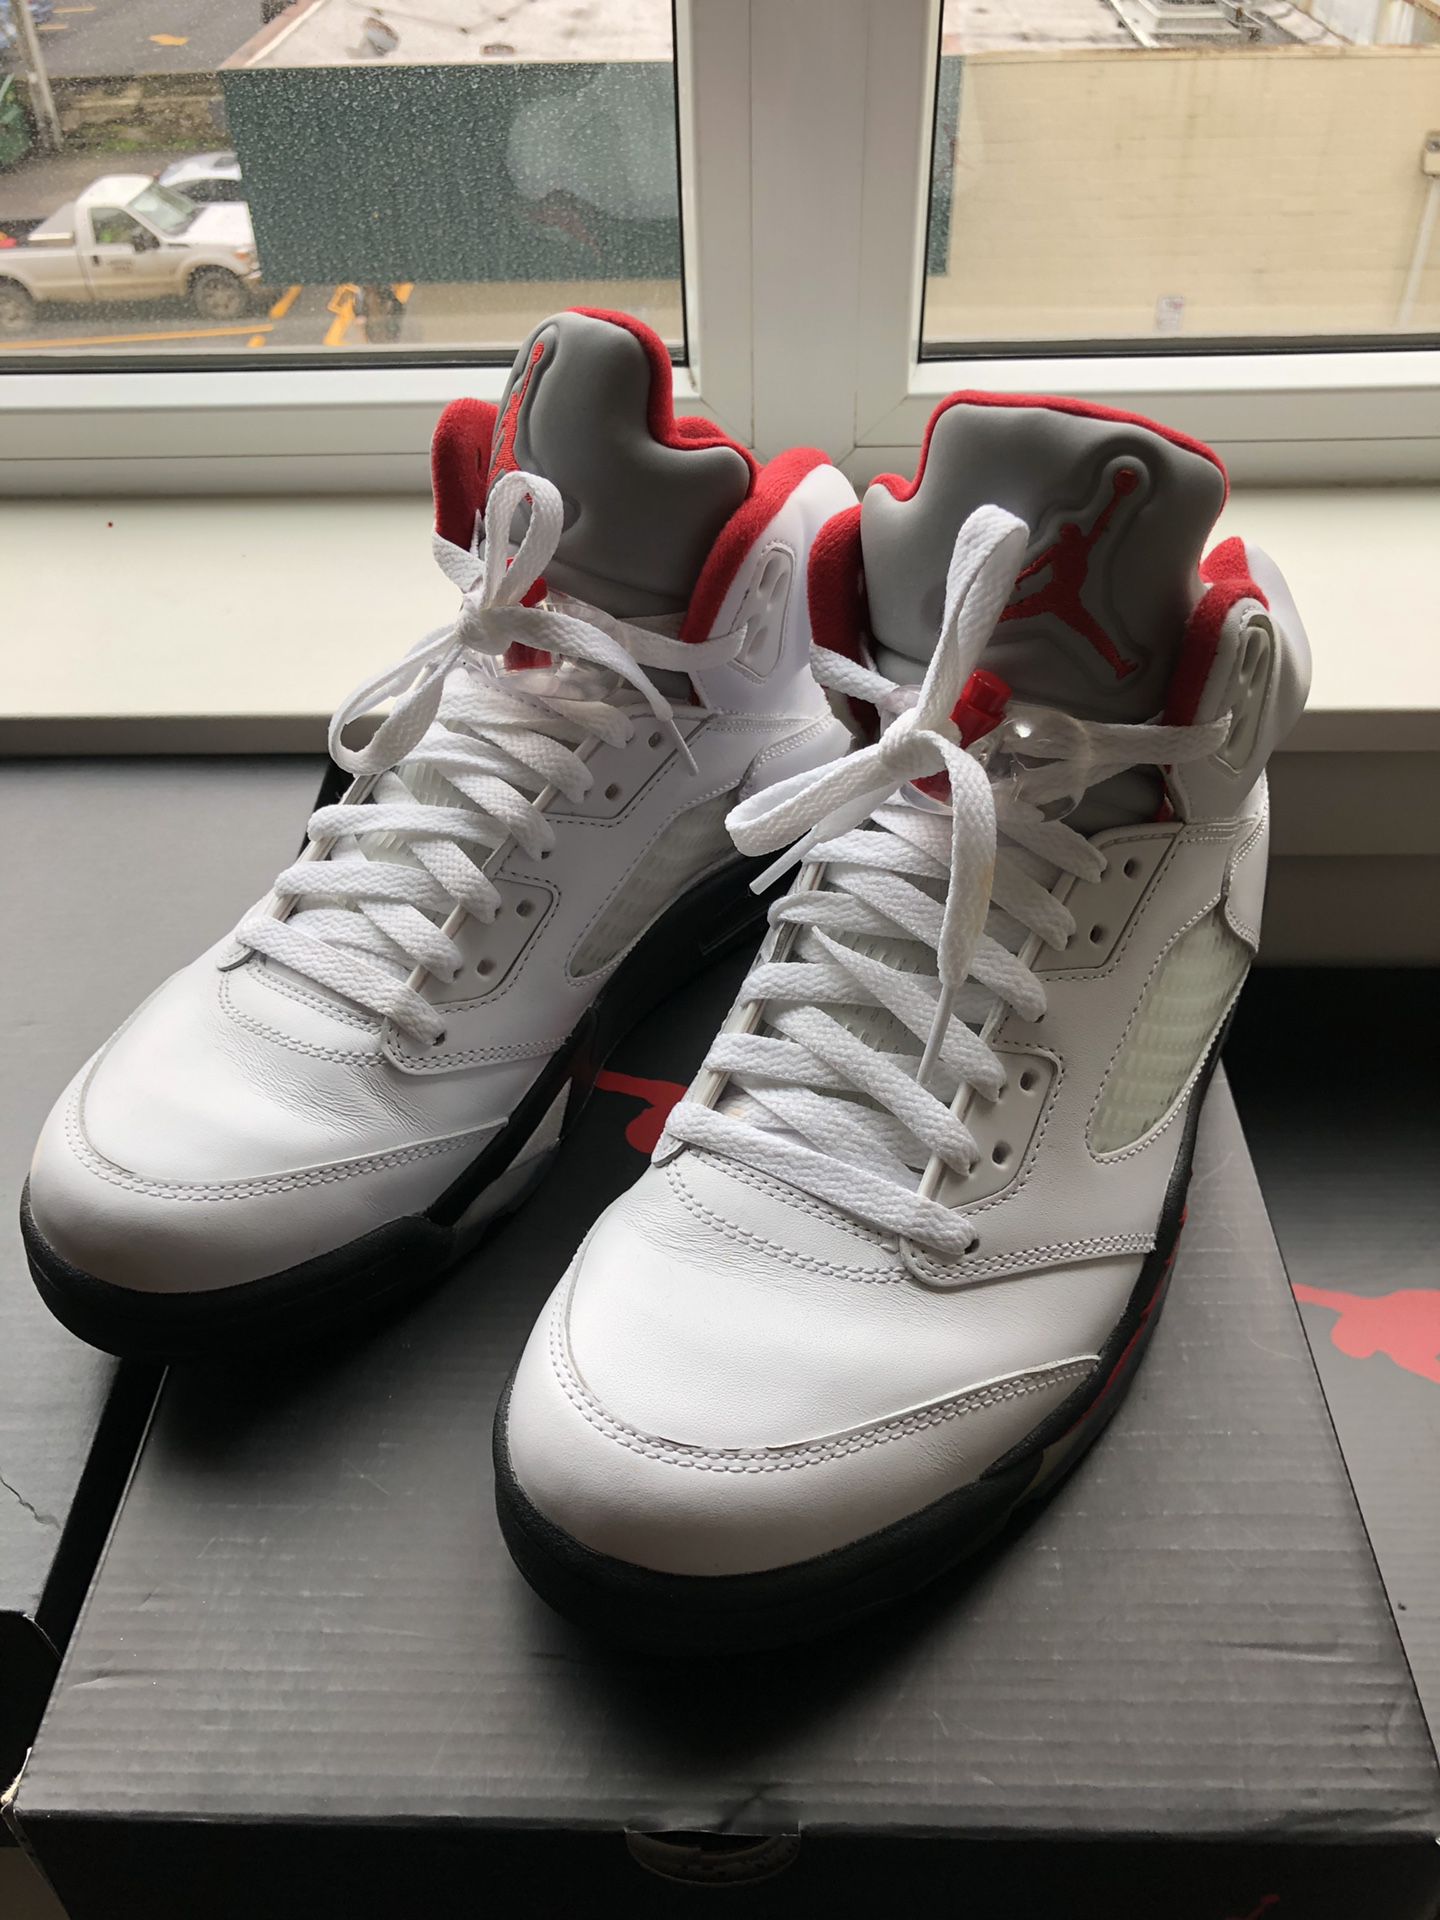 Nike Air Jordan 5 Retro Fire Red. Size 8.5.